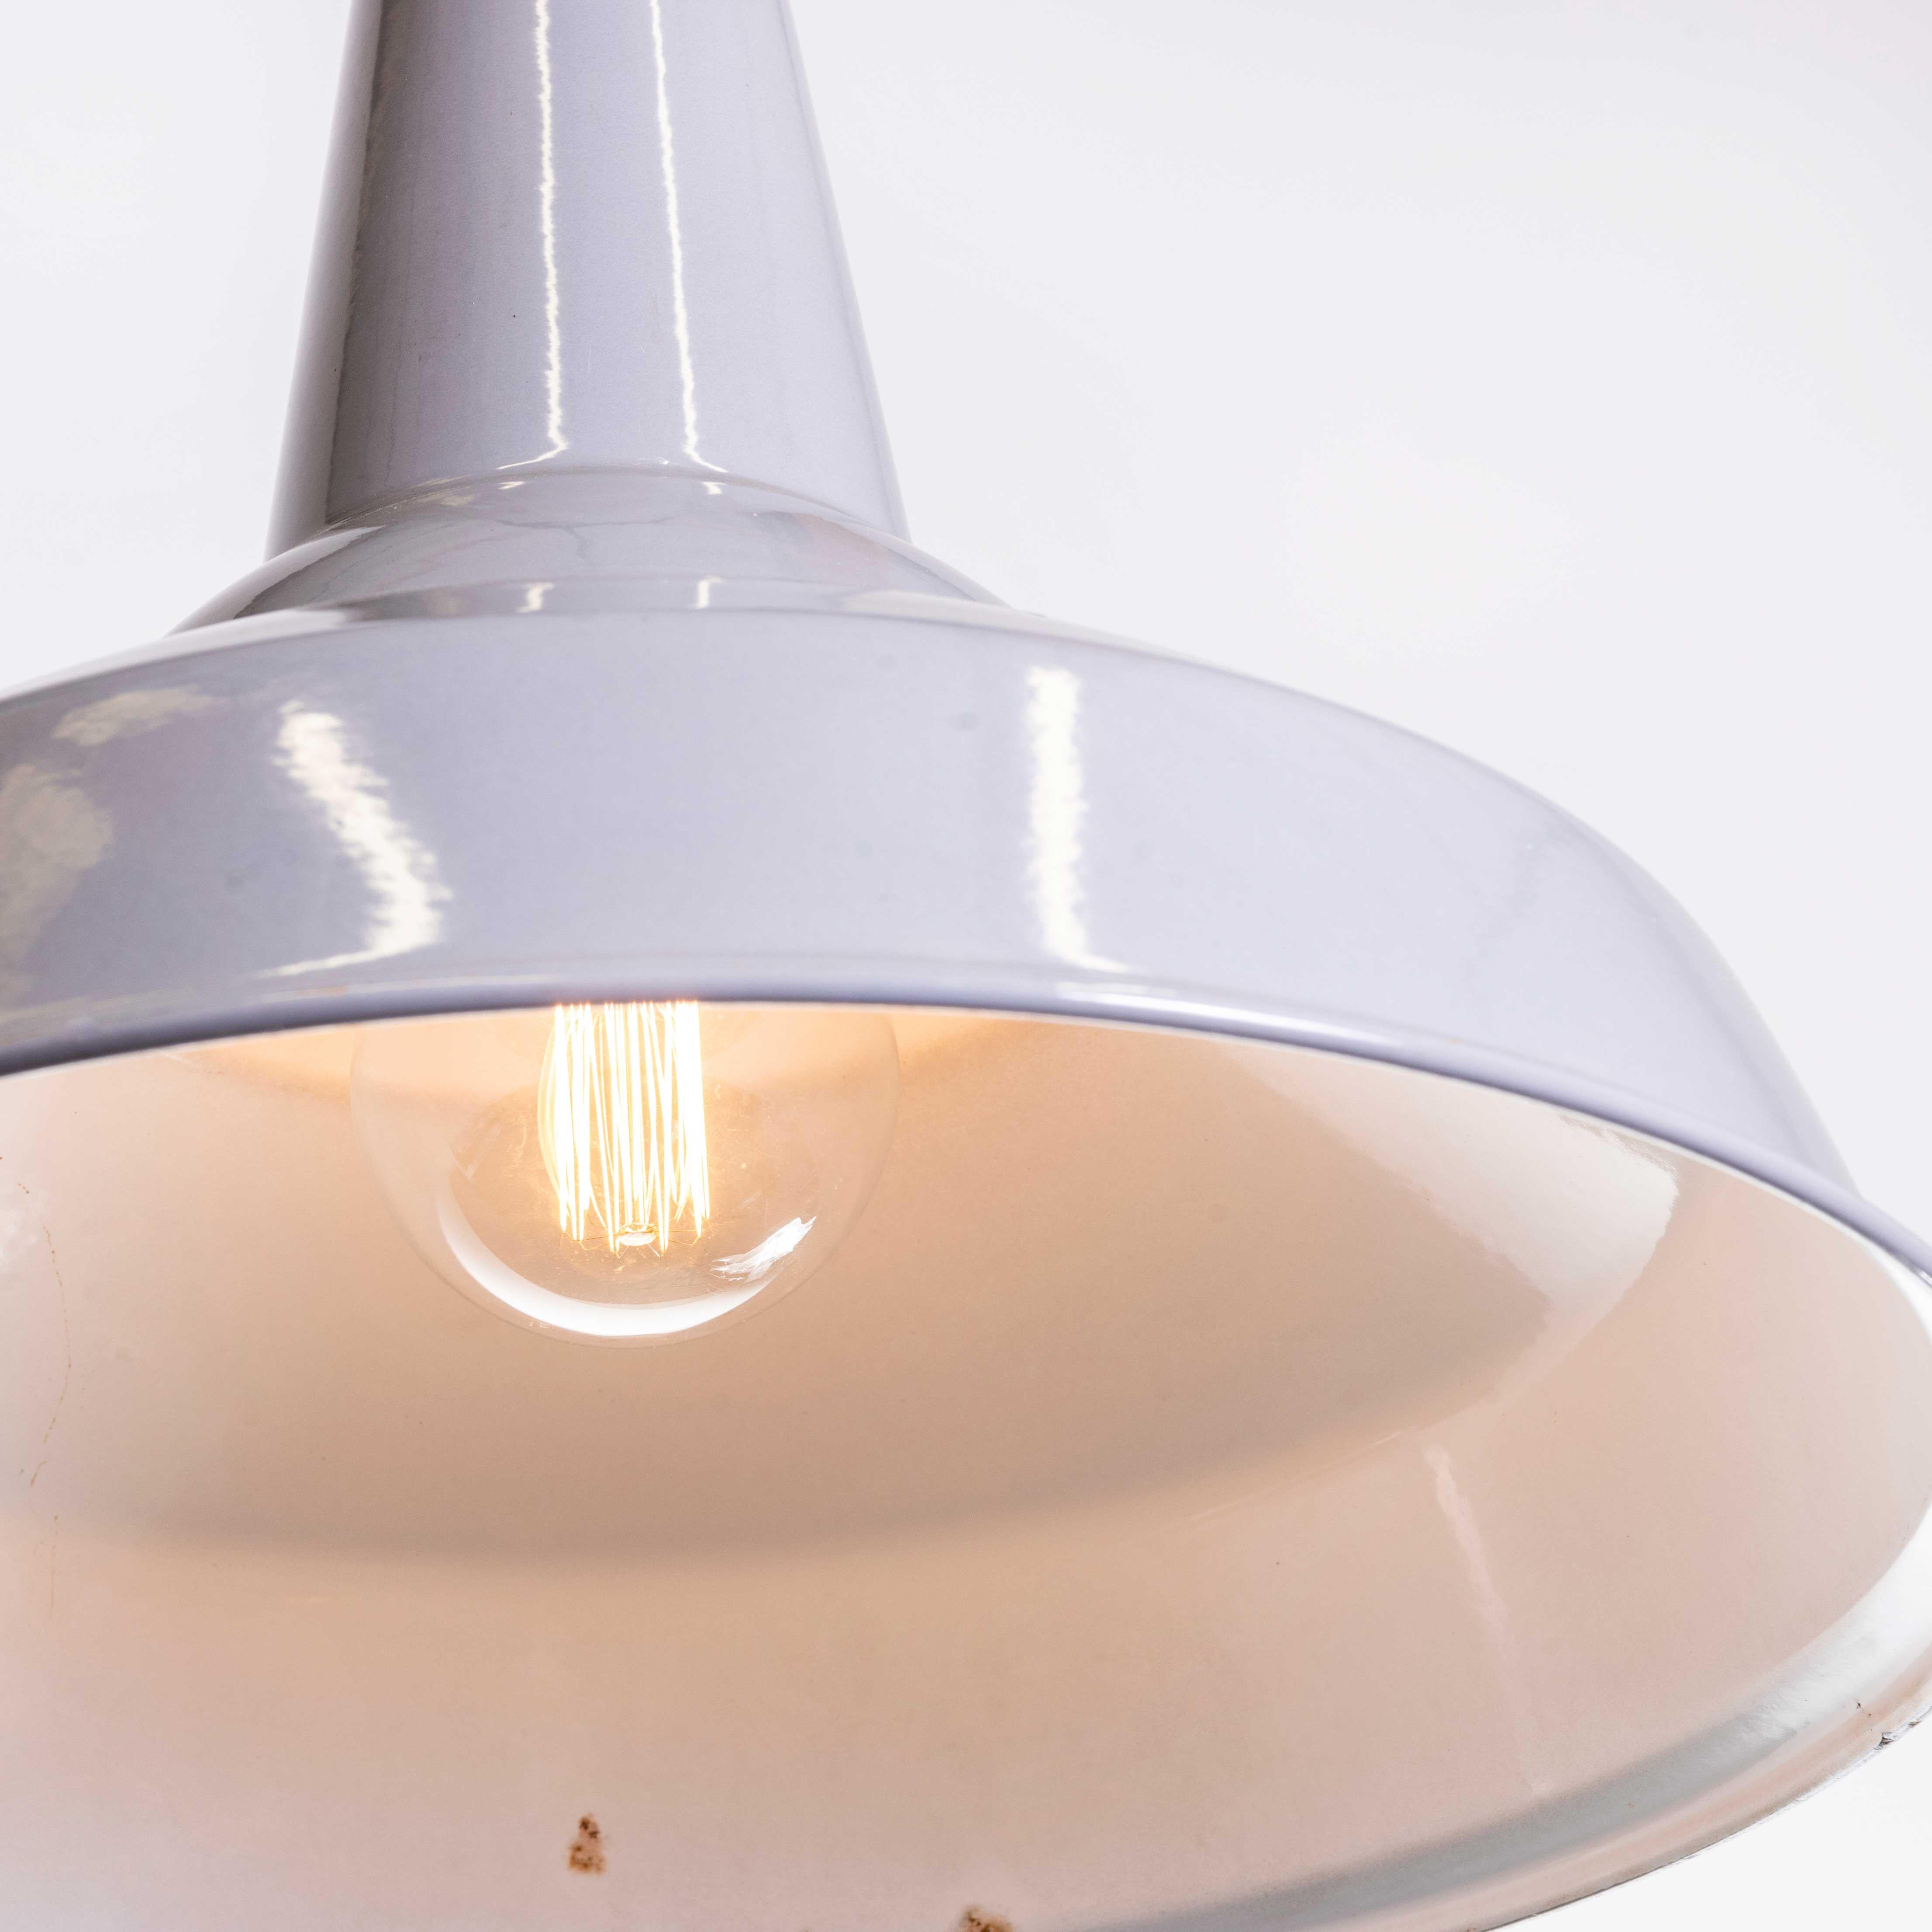 1950's Industrial Benjamin Enamelled Pendant Lamps 16 Inch - Pair For Sale 3